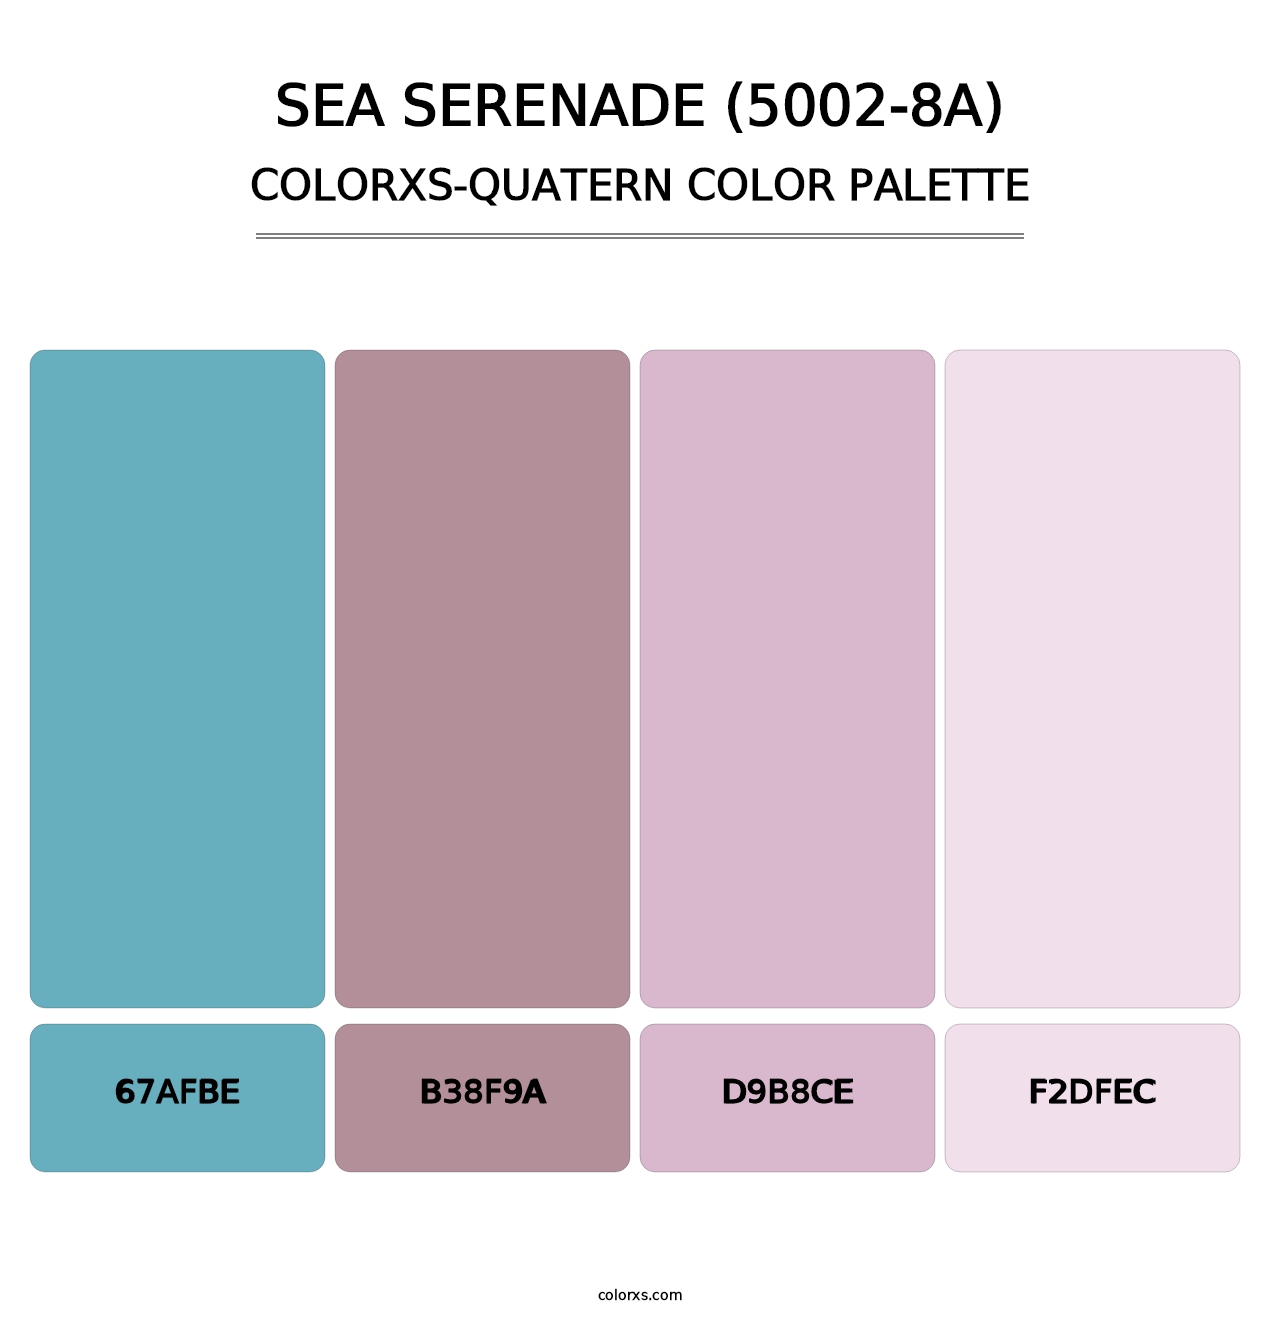 Sea Serenade (5002-8A) - Colorxs Quatern Palette